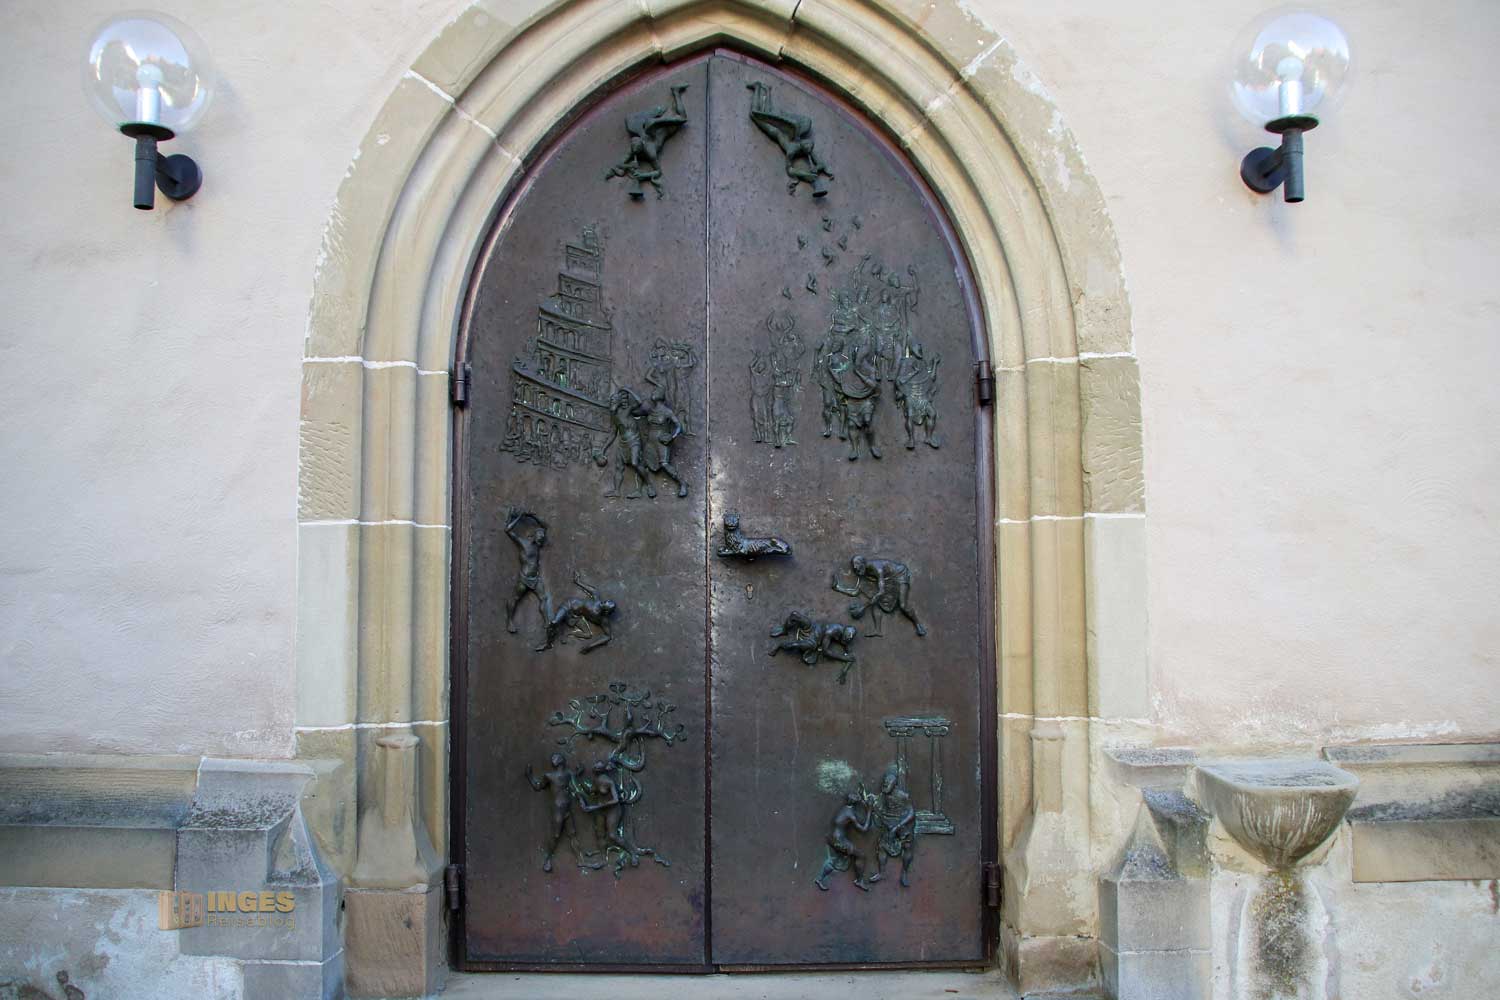 Kirchentüre Kirche in Strümpfelbach 0071